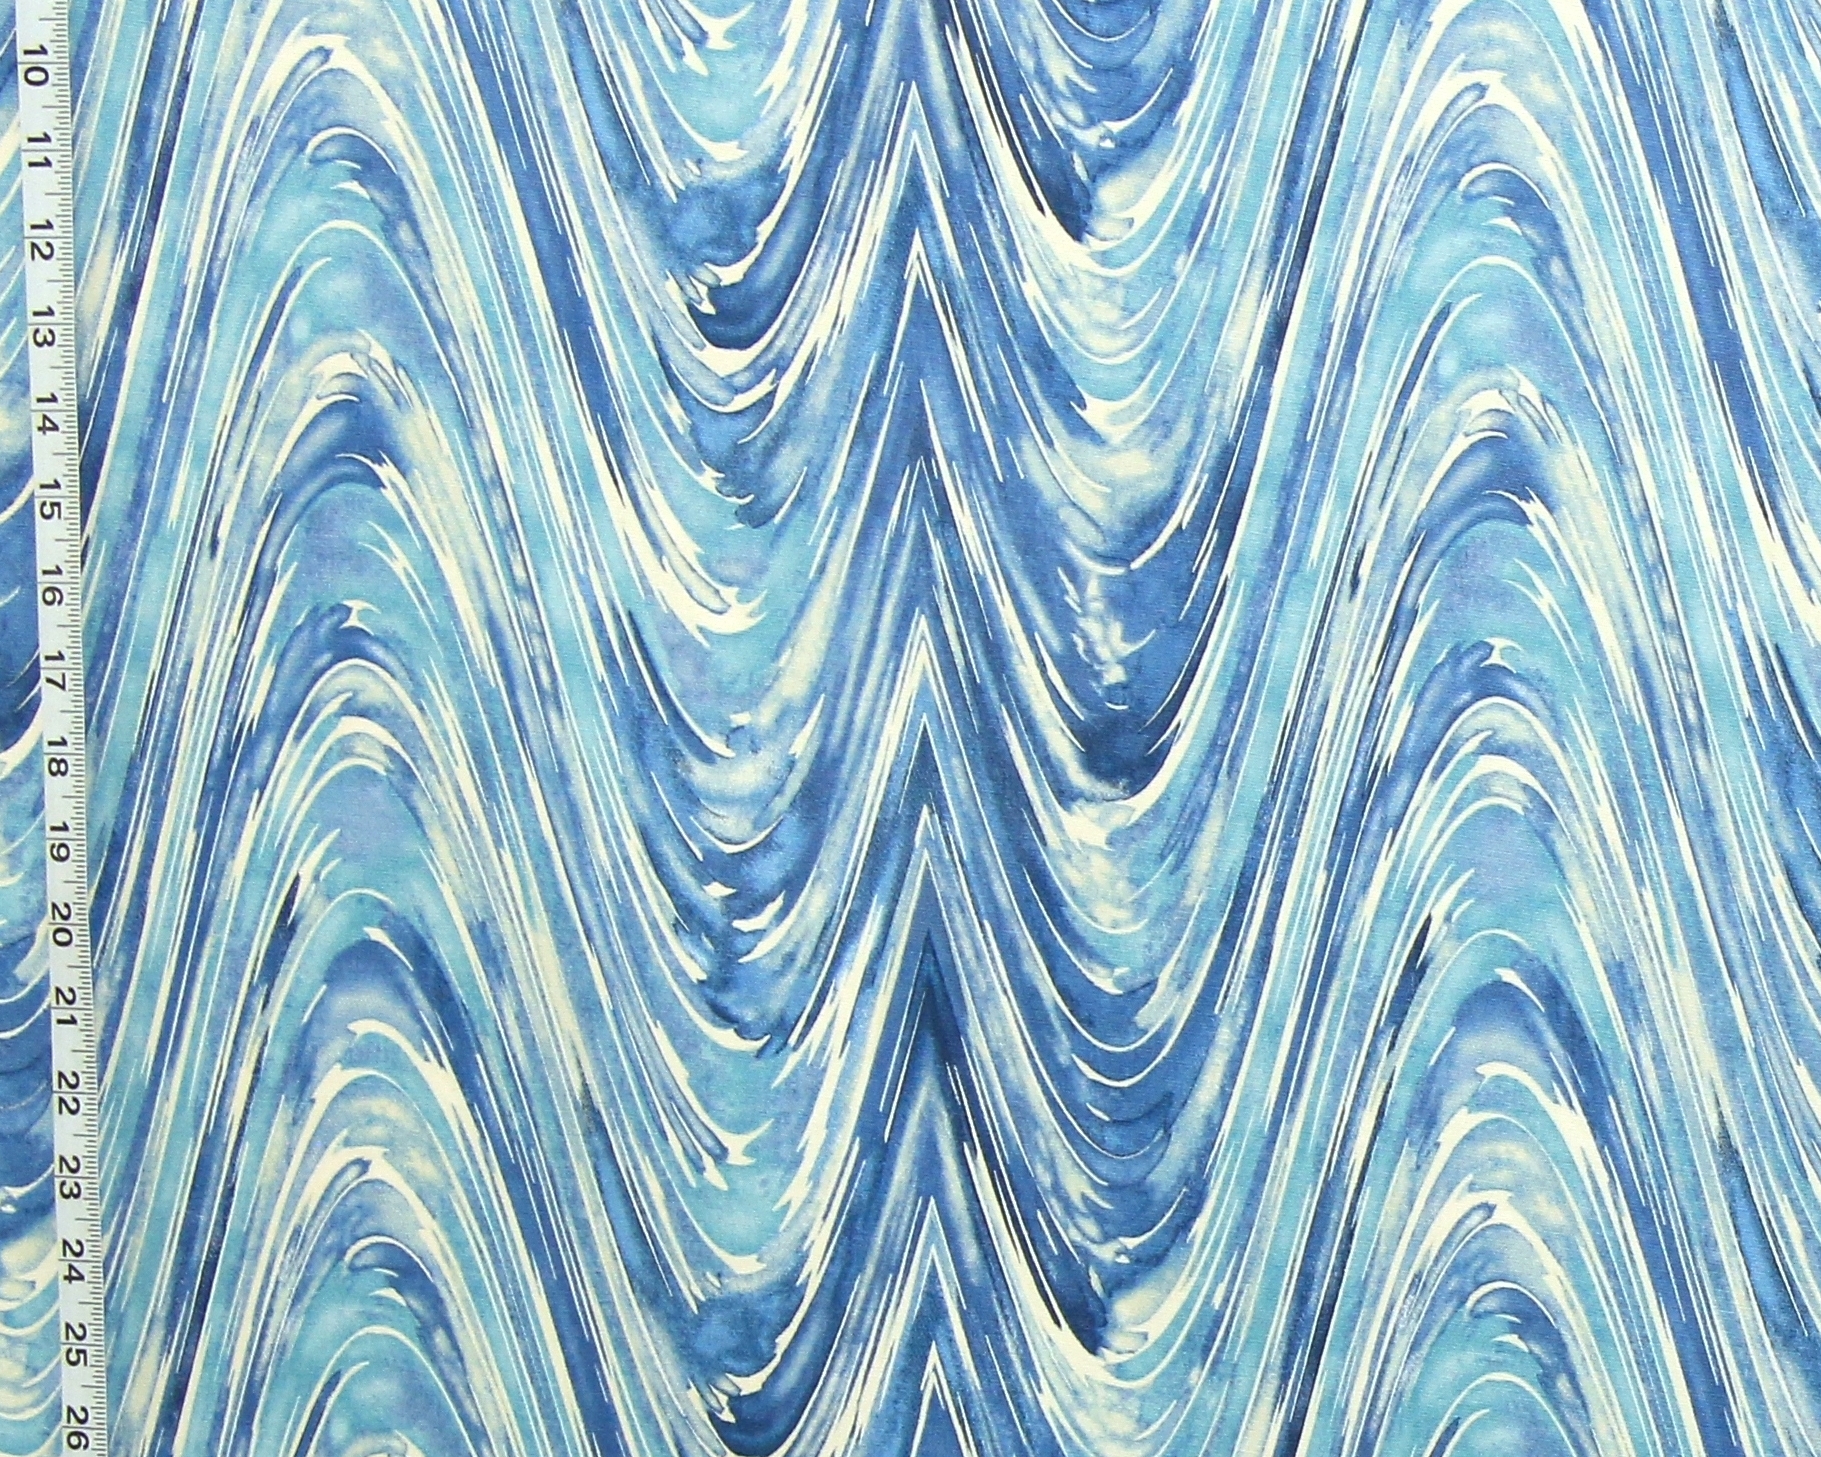 BLUE MARBLED FABRIC, OCEAN WAVES